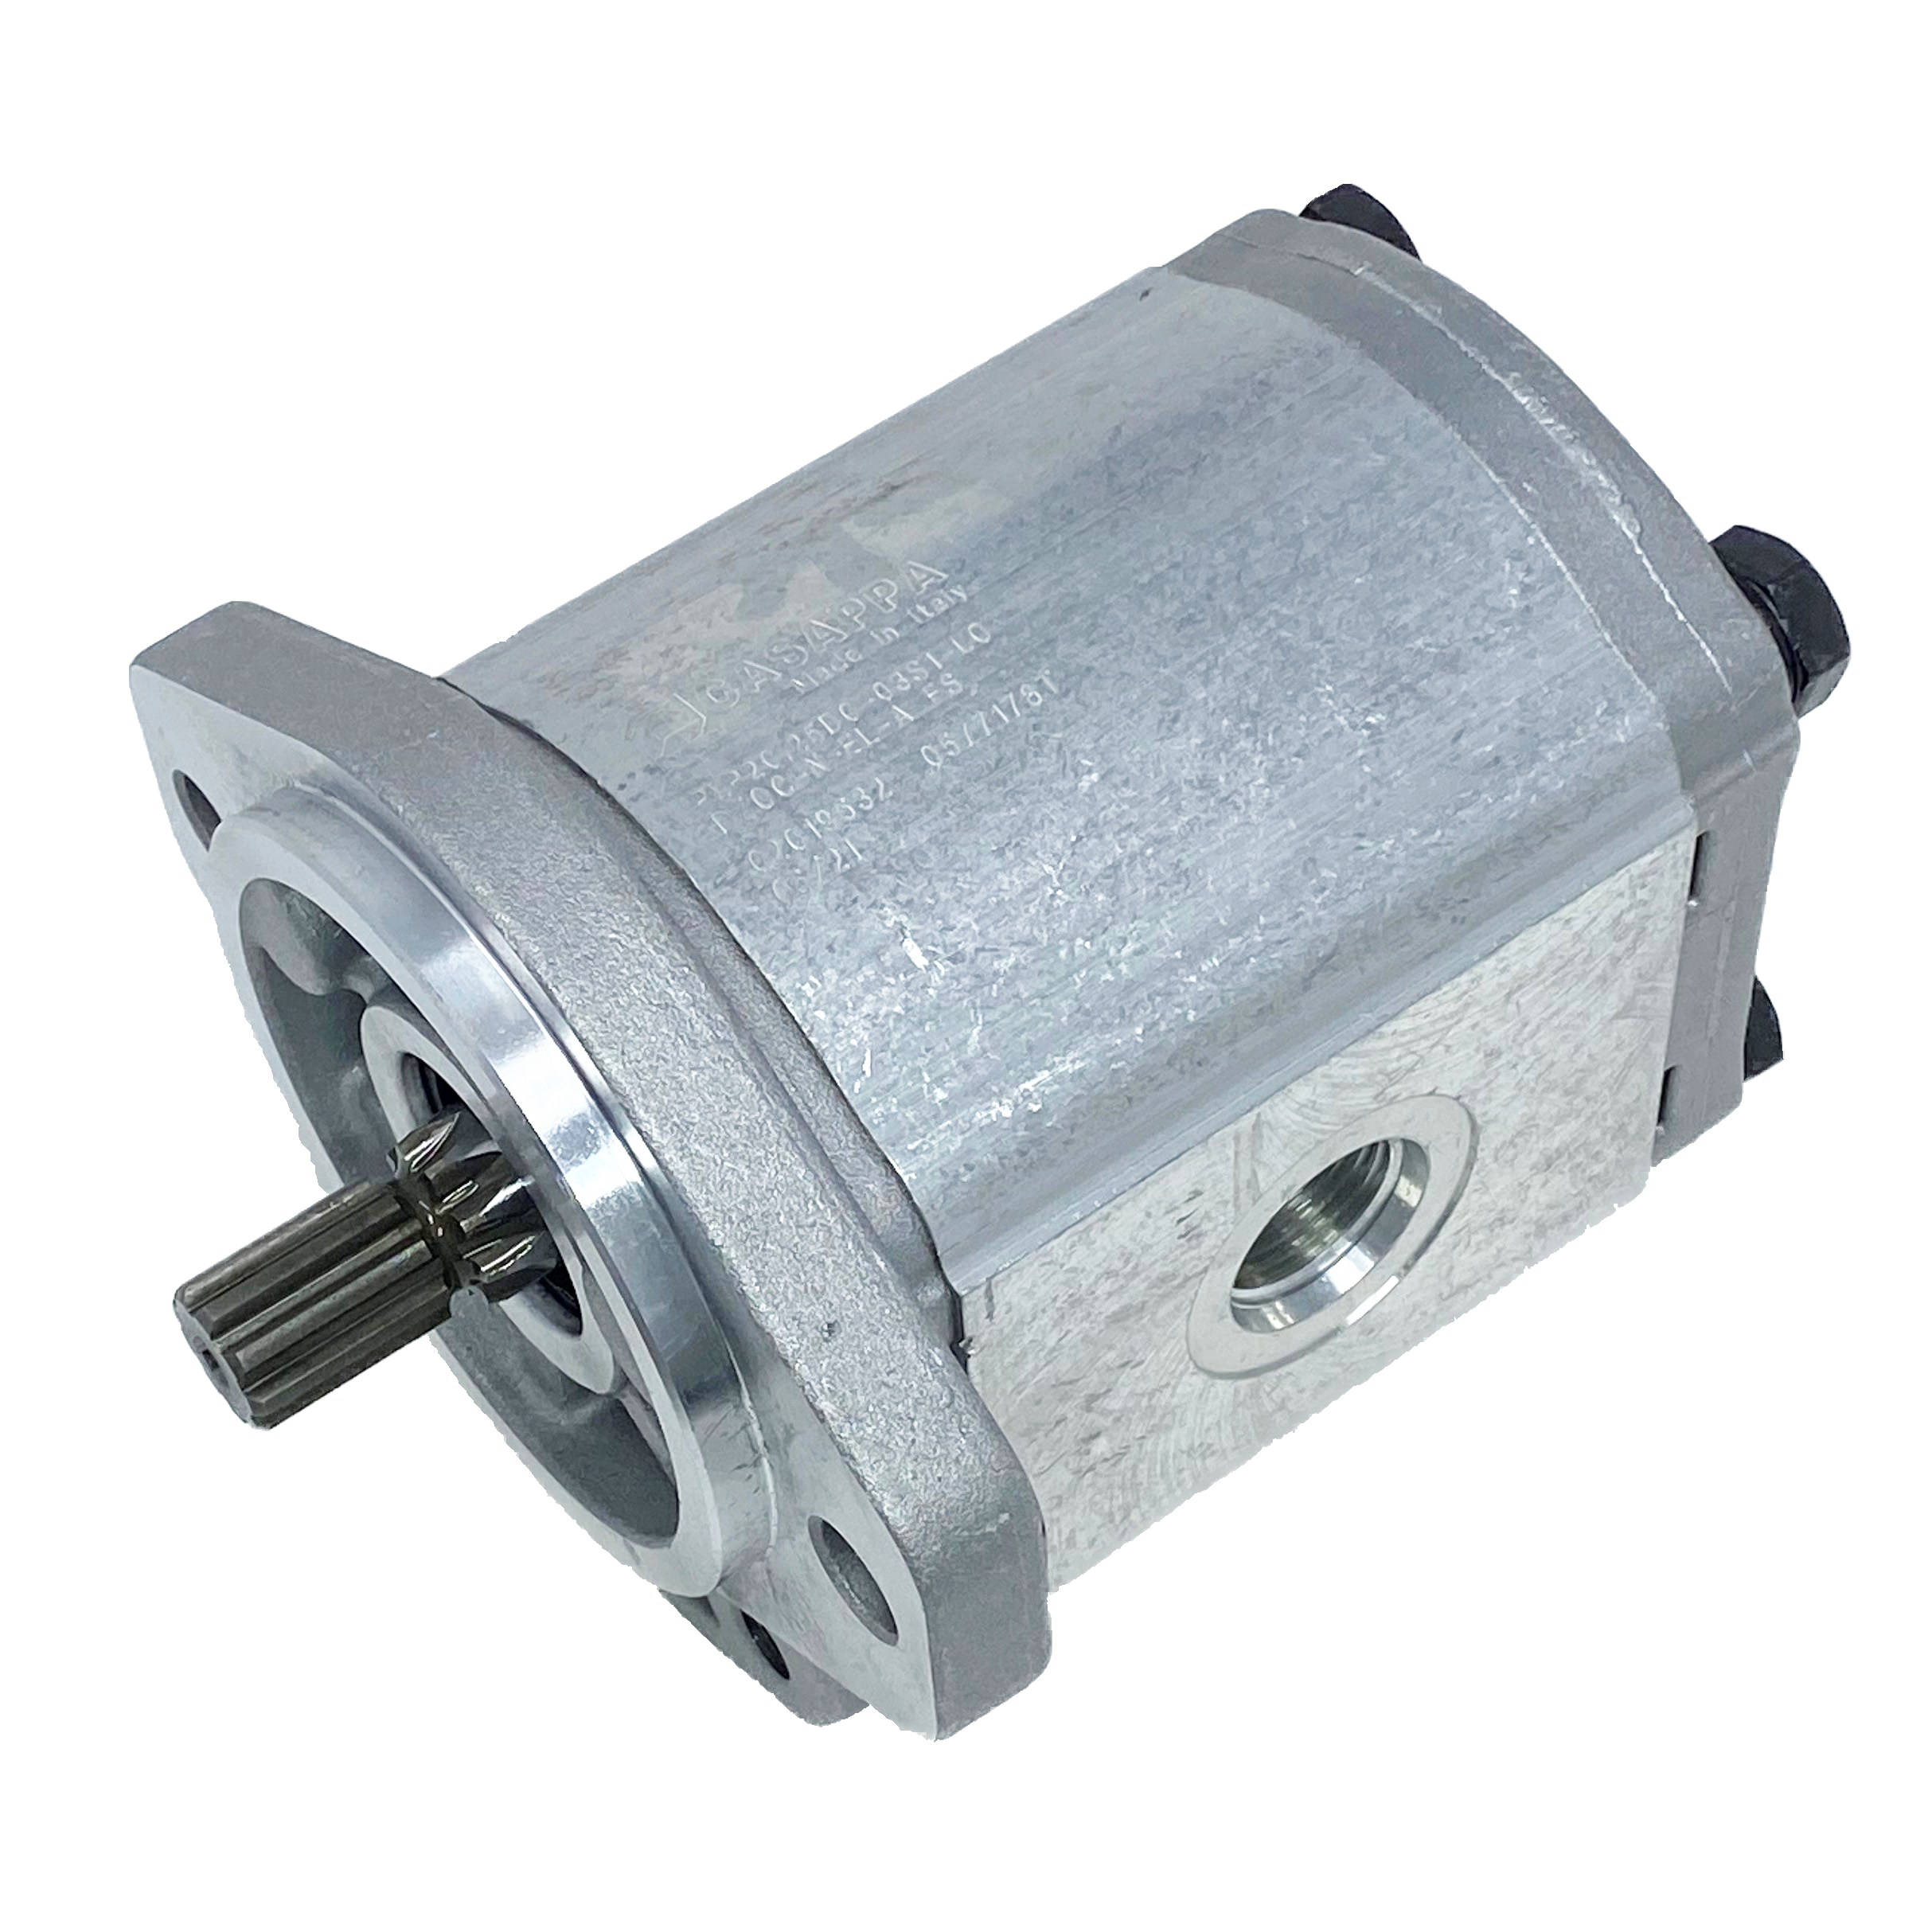 PLM20.31,5R0-07S1-LOC/OD-N-EL : Casappa Polaris Gear Motor, 33.03cc, 1885psi Rated, 2465RPM, Reversible Rear External Drain, 11T 16/32dp Shaft, SAE A 2-Bolt Flange, 0.625 (5/8") #10 SAE Inlet, 0.75 (3/4") #12 SAE Outlet, Aluminum Body & Flange